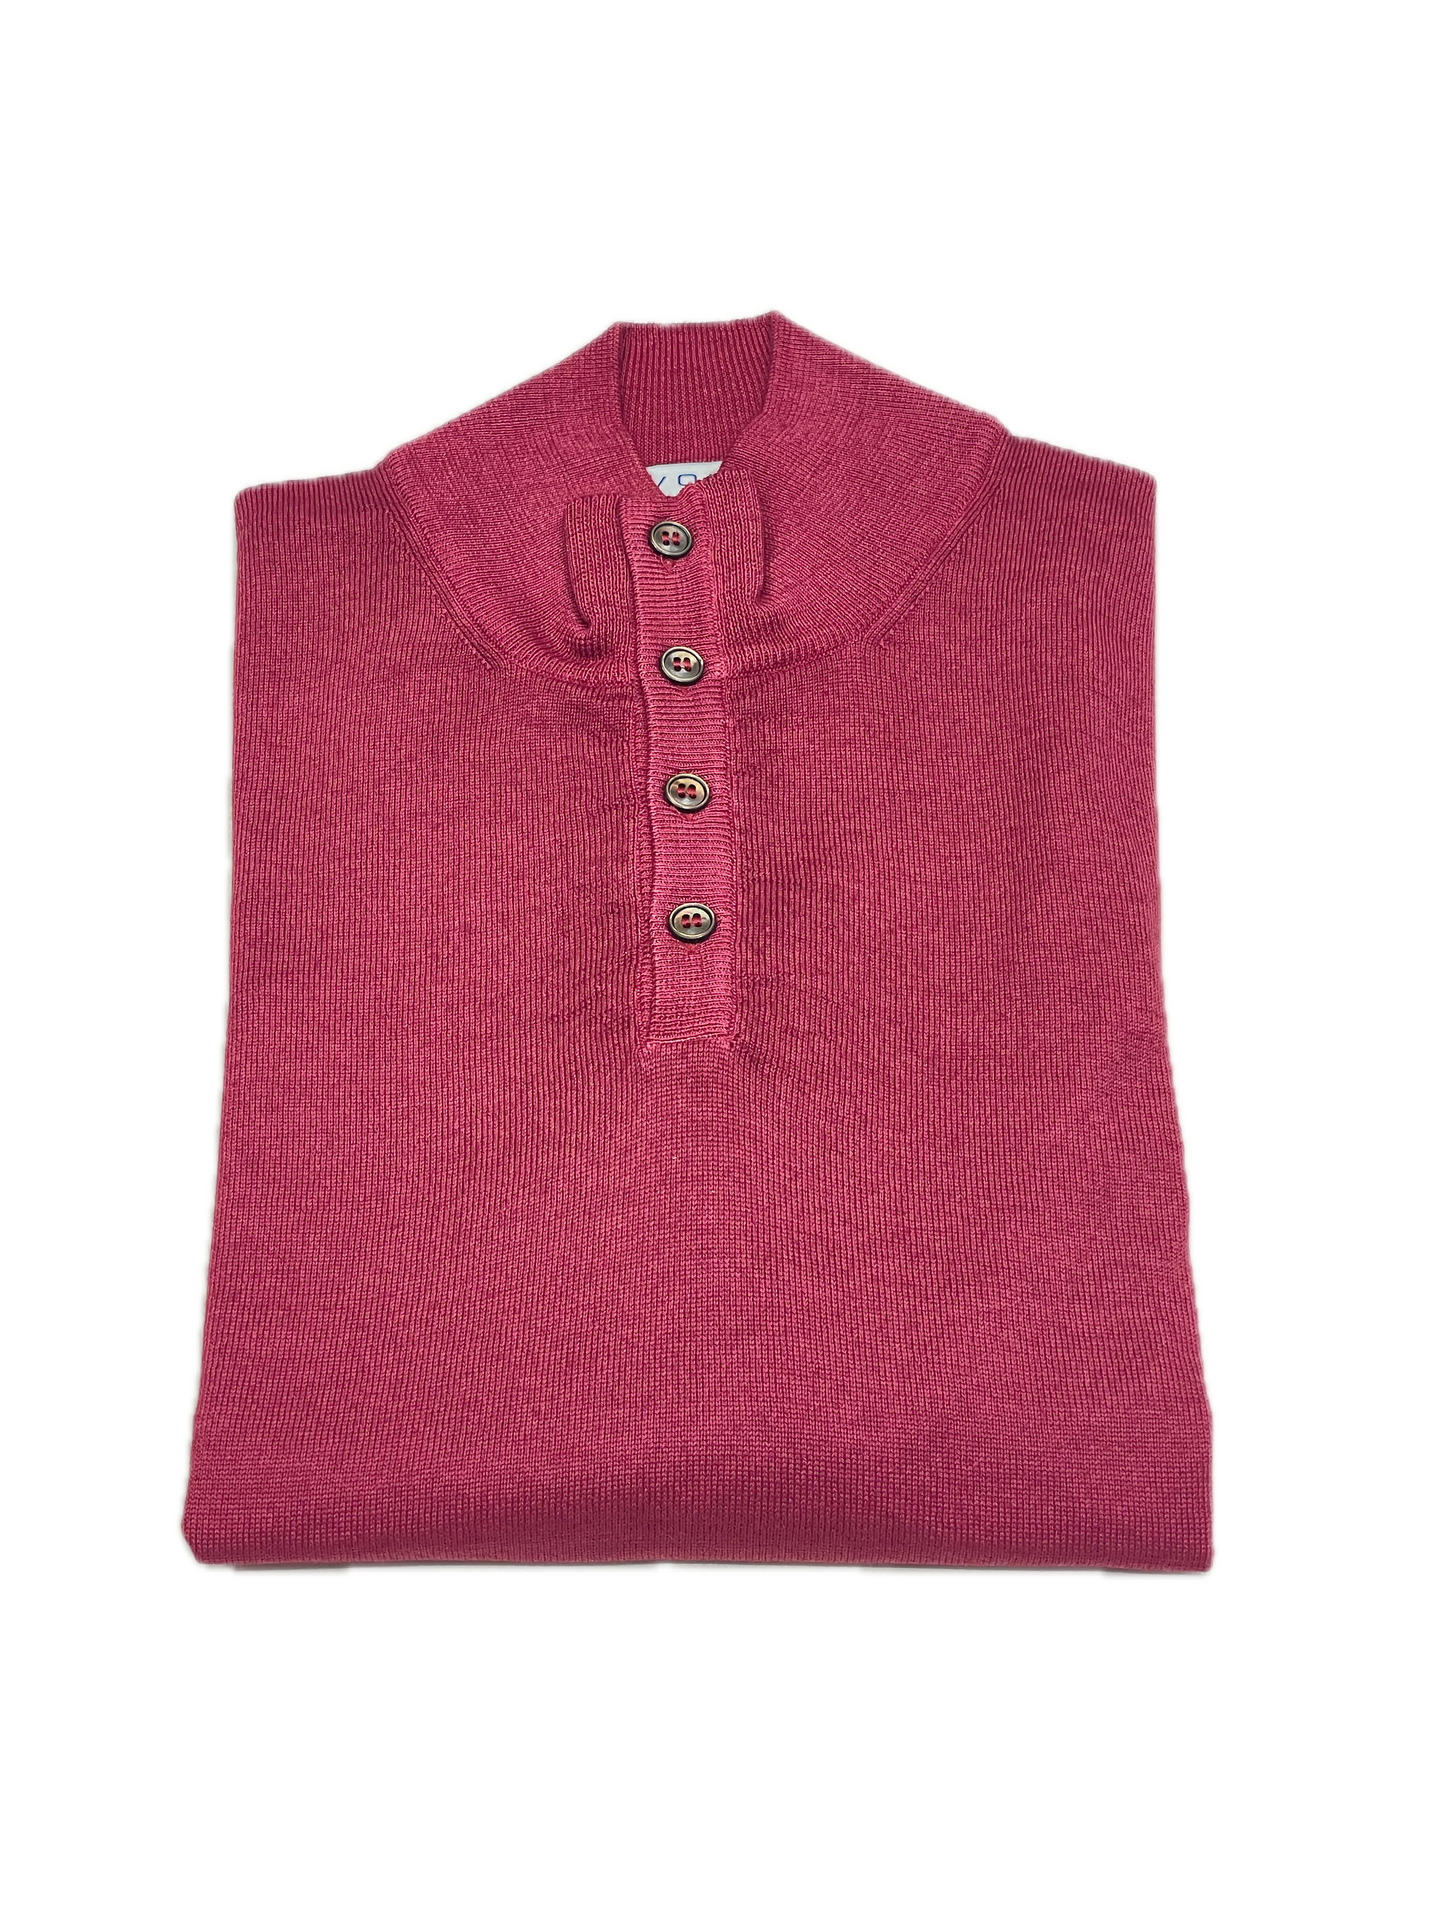 Button neck pullover in Raspberry vintage merino wool